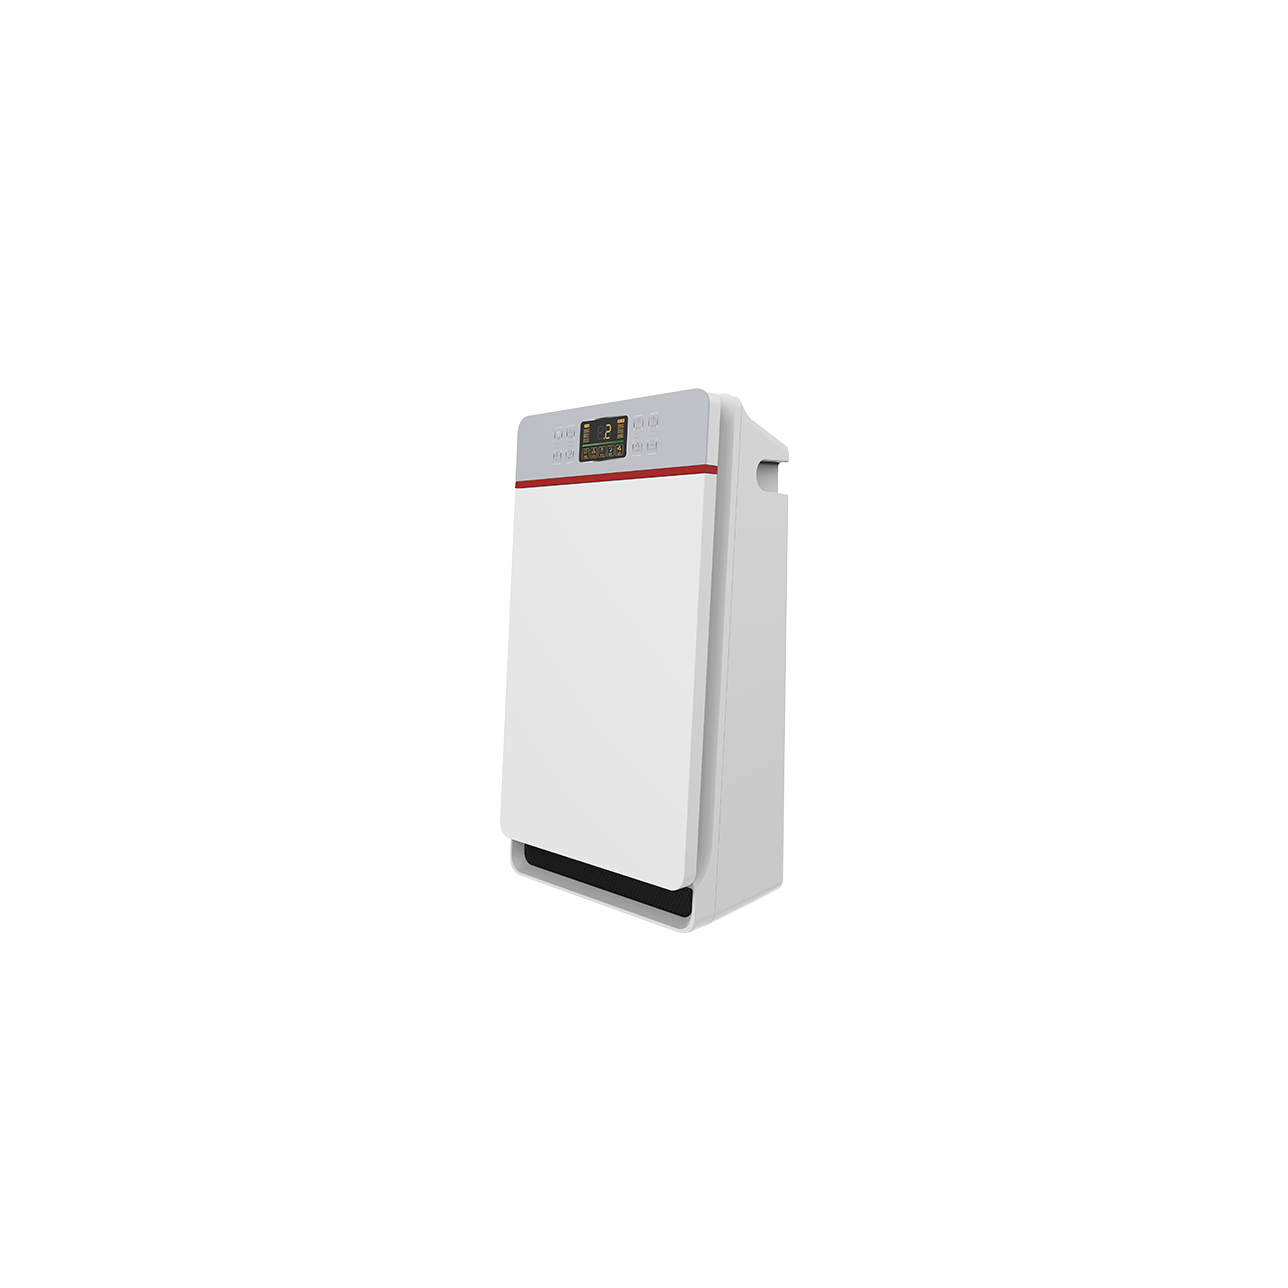 Household Humidifier air purifier with hepa